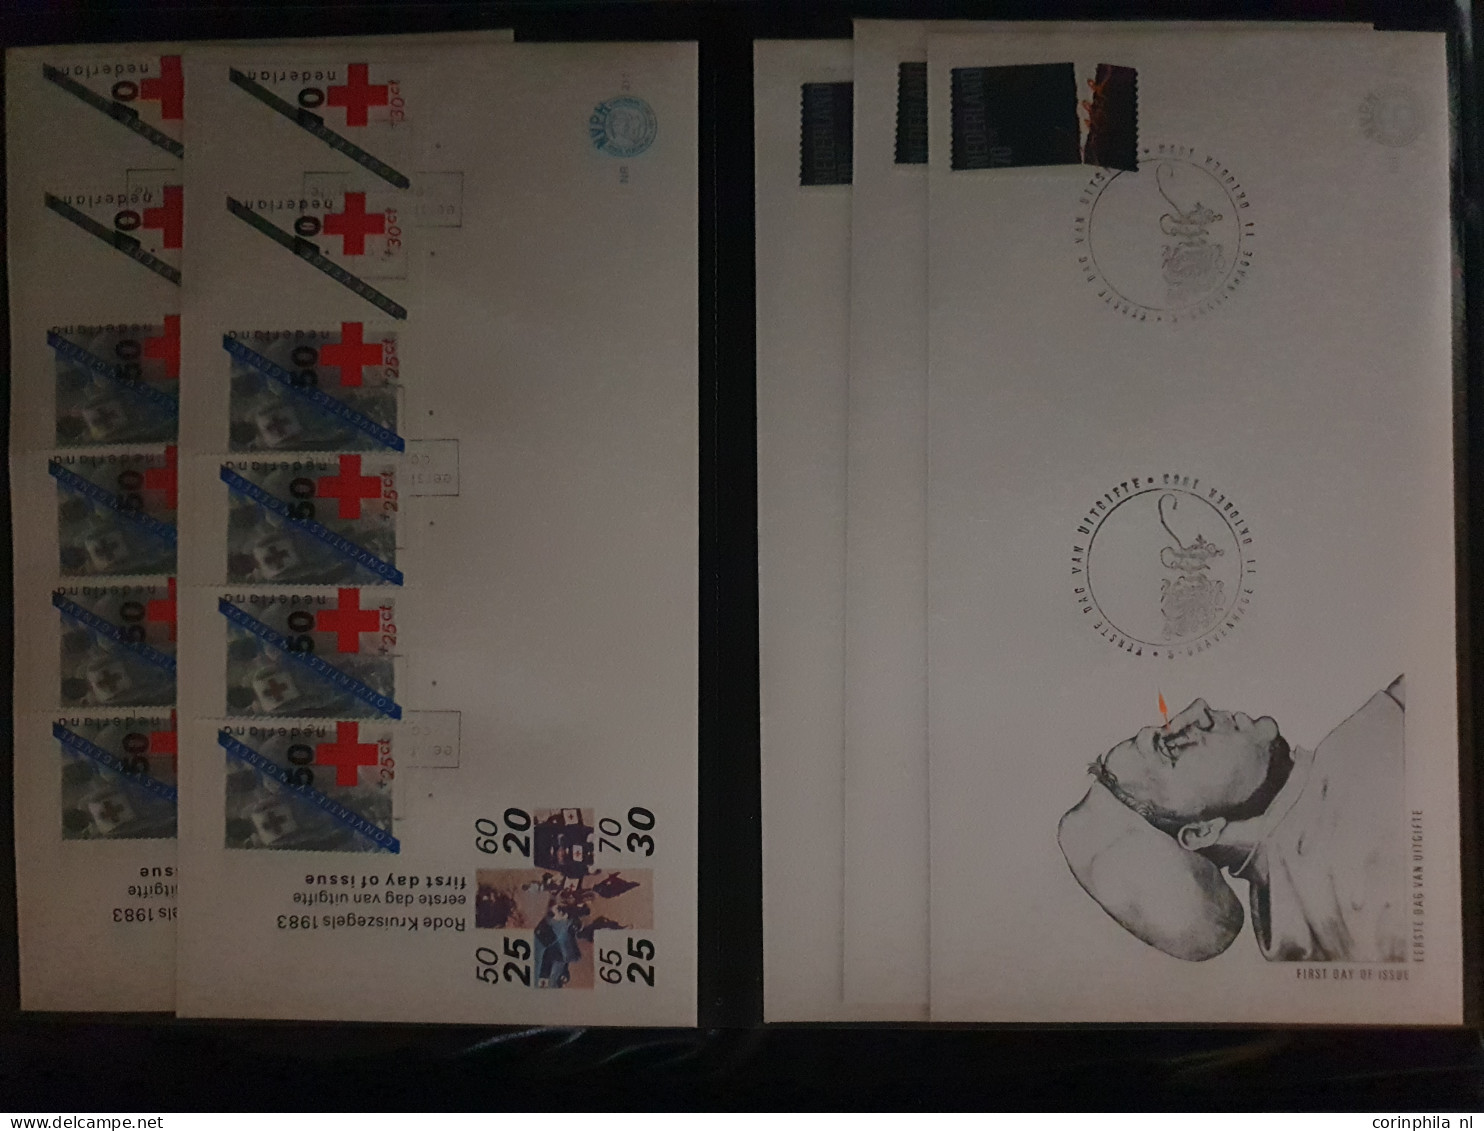 Cover 1953-2022 collectie fdc's t/m E853 w.b. tevens iets nominaal in 15 ringbandjes in 2 verhuisdozen